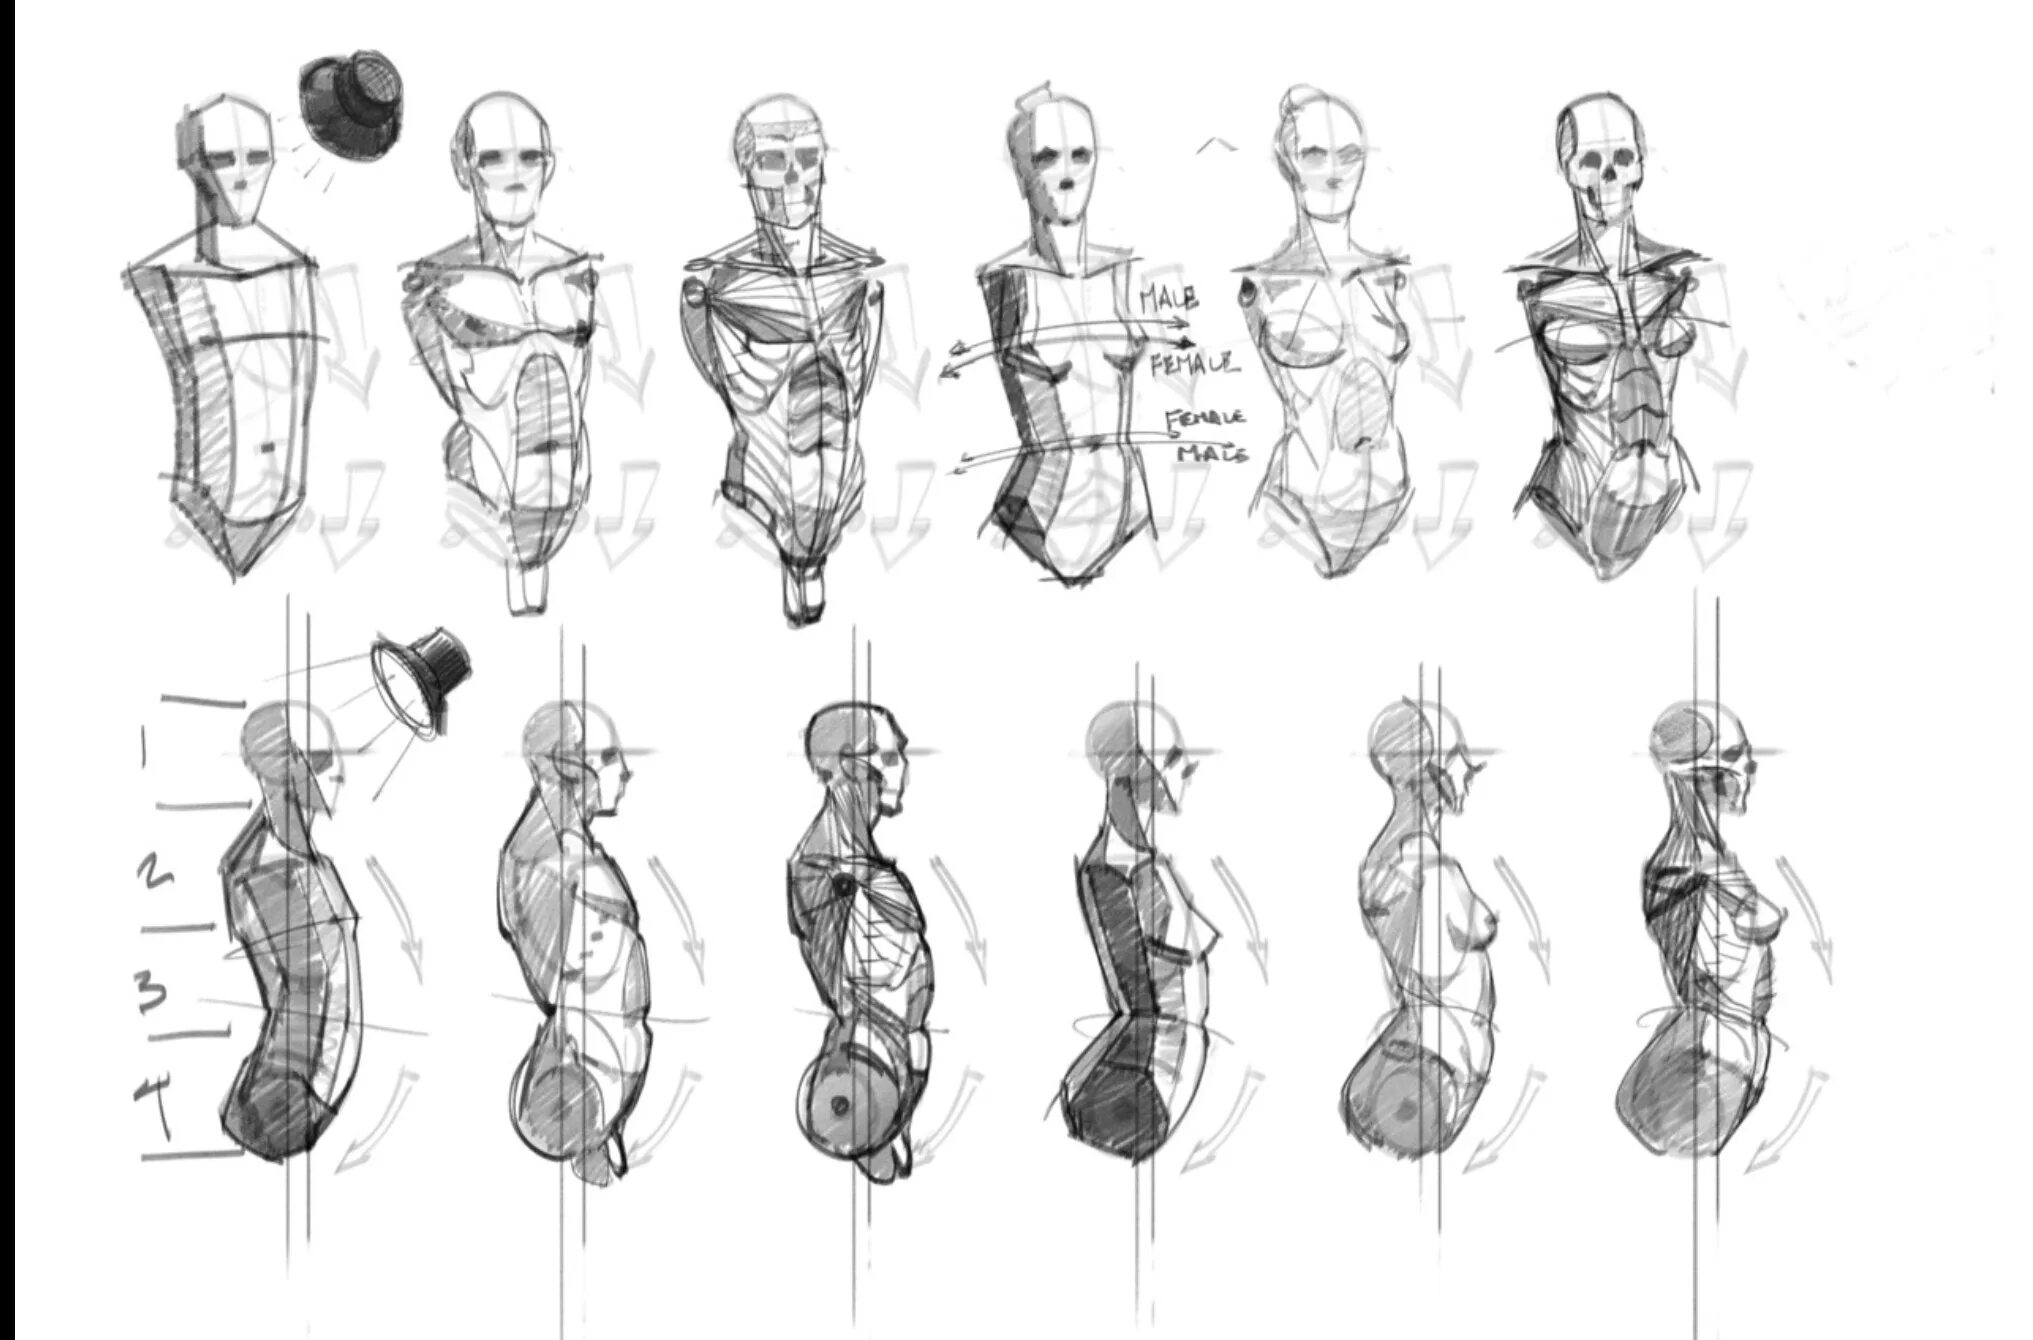 Анатомия человека референсы. Анатомия человеческого тела референсы. Человек в профиль анатомия референс. Женская фигура референс анатомия. Референс значения